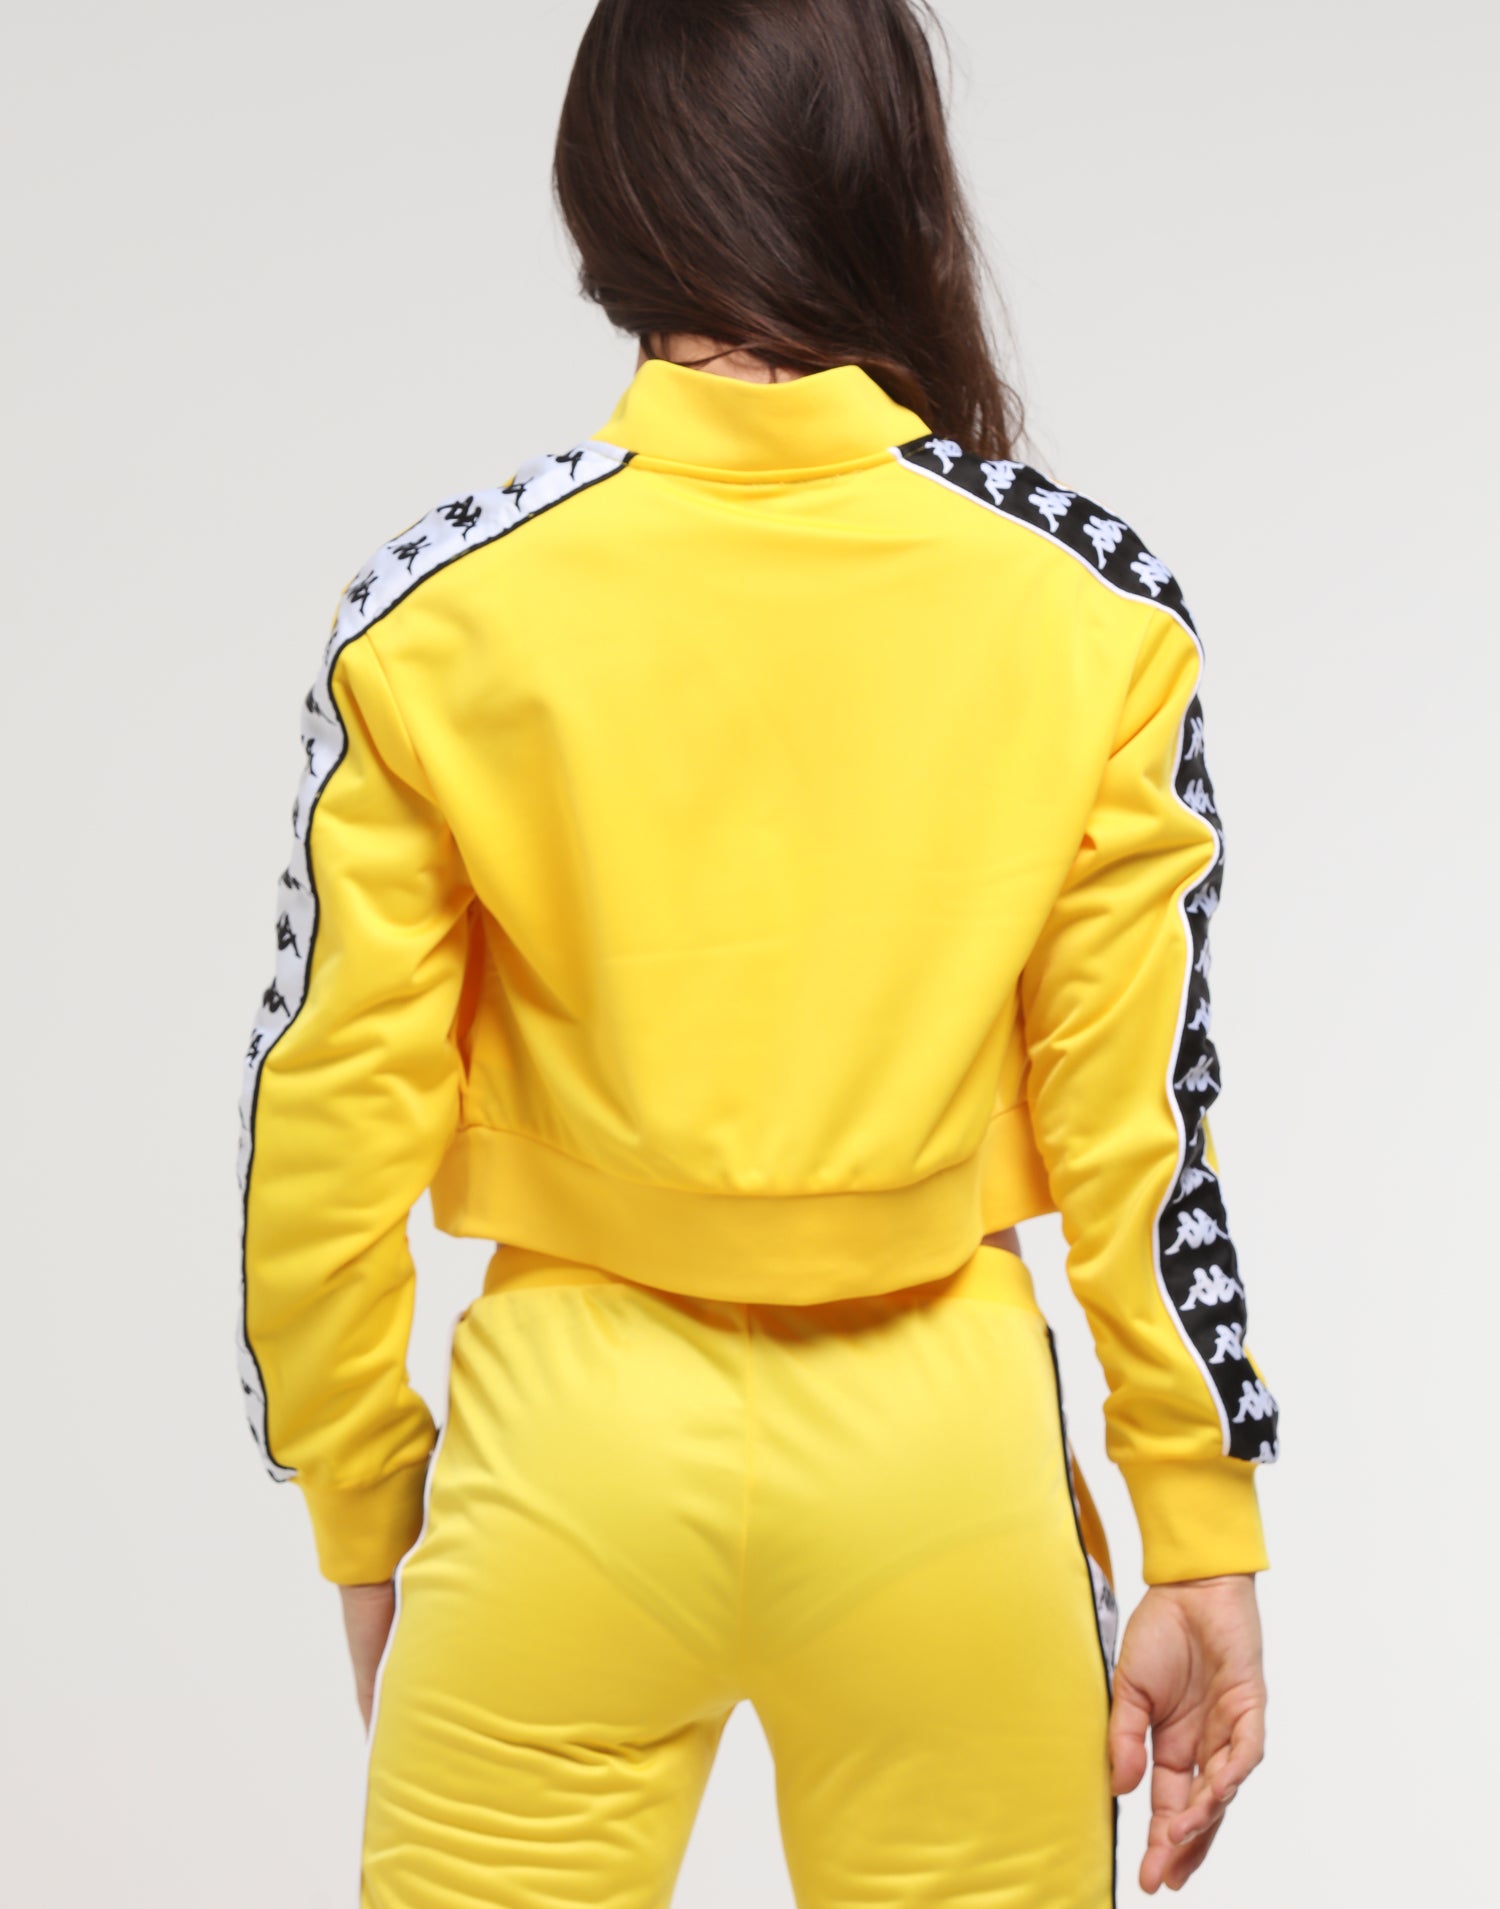 kappa jacket yellow